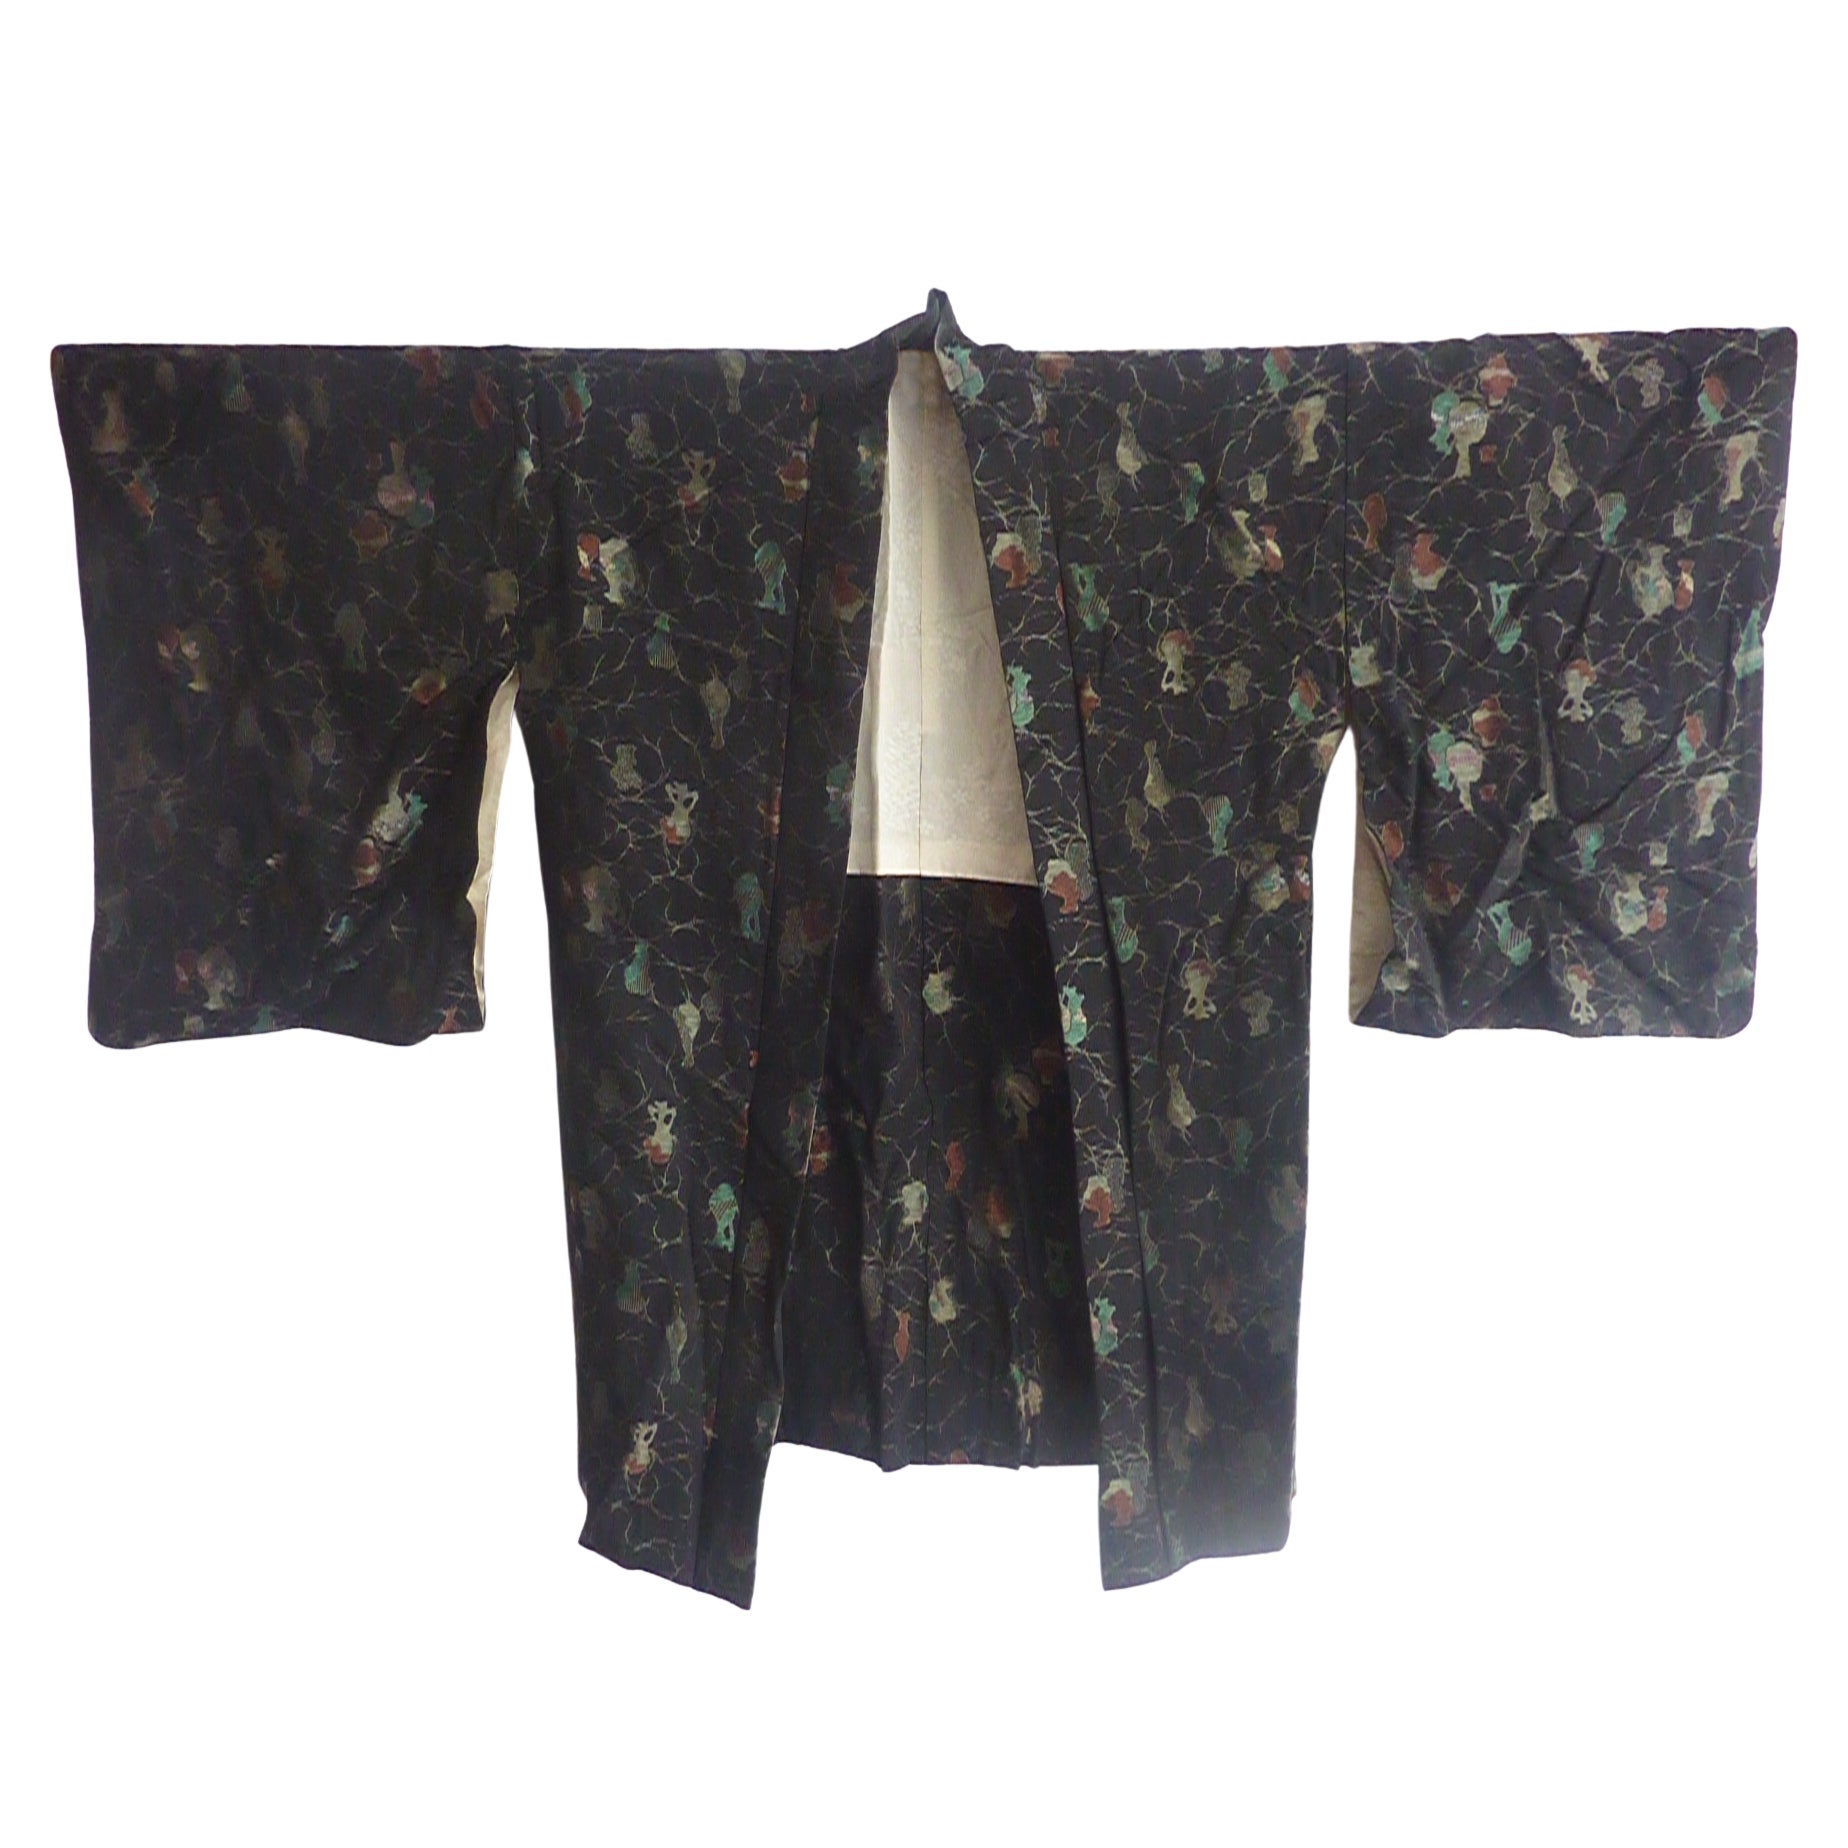 Veste kimono Haori japonaise ancienne en brocart de soie noir avec doublure en jacquard Sakura en vente